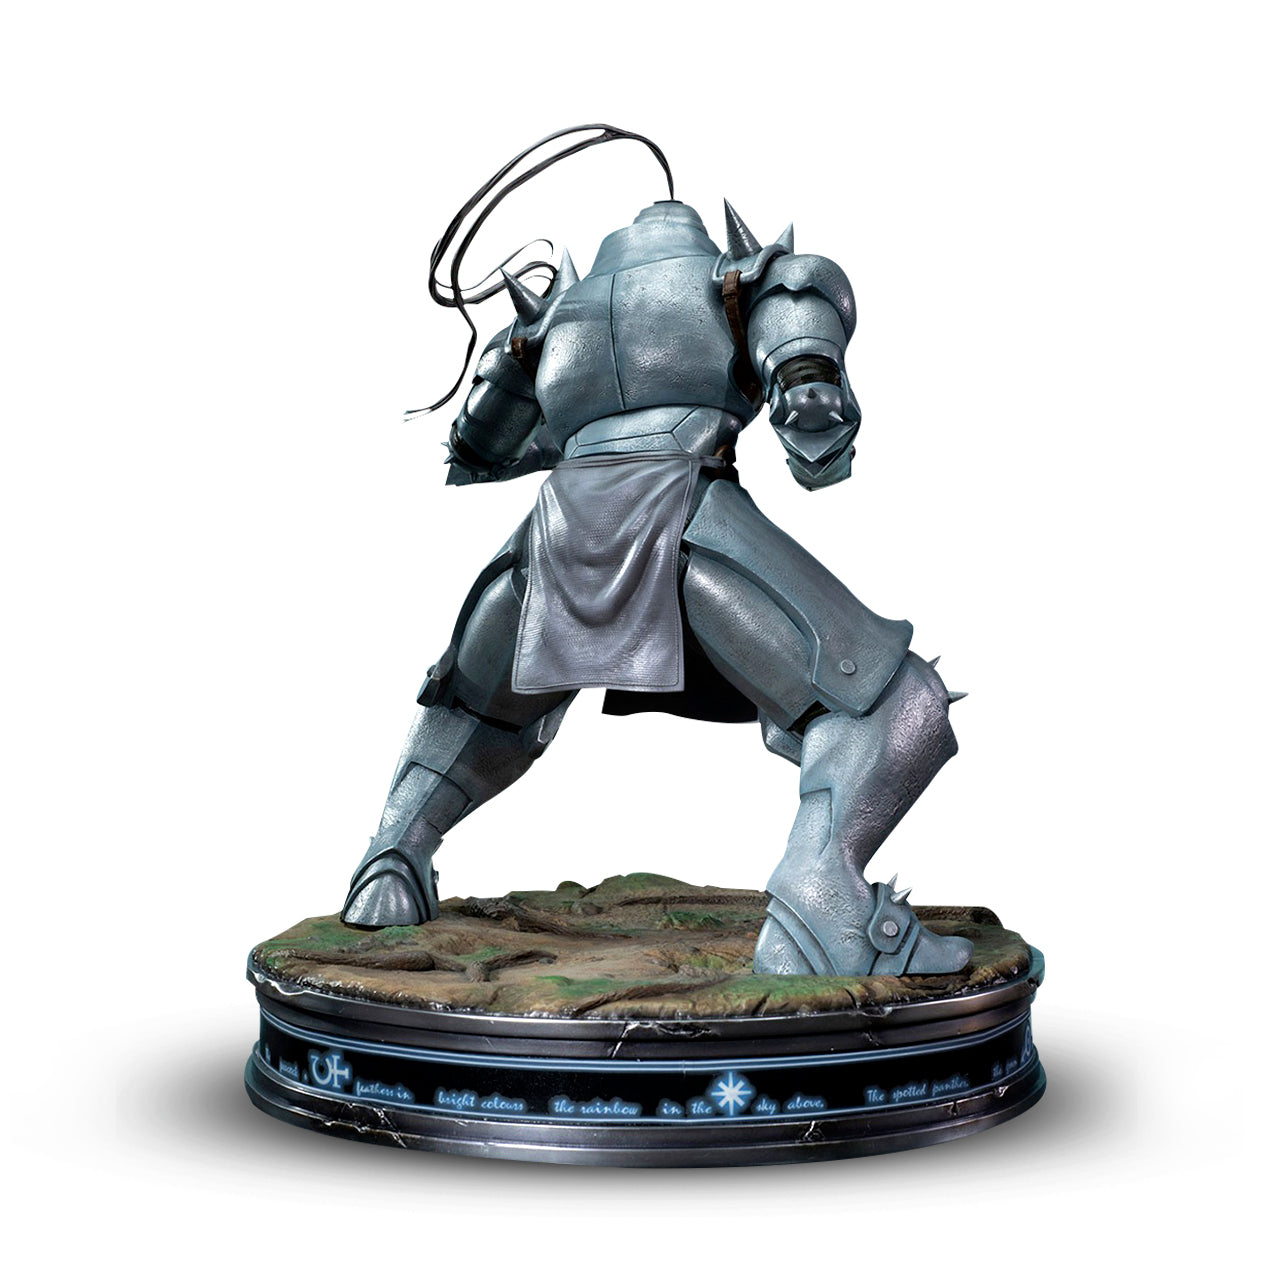 Fullmetal Alchemist: Brotherhood - Alphonse Elric First 4 Figures Statue (Gray Variant) image count 1